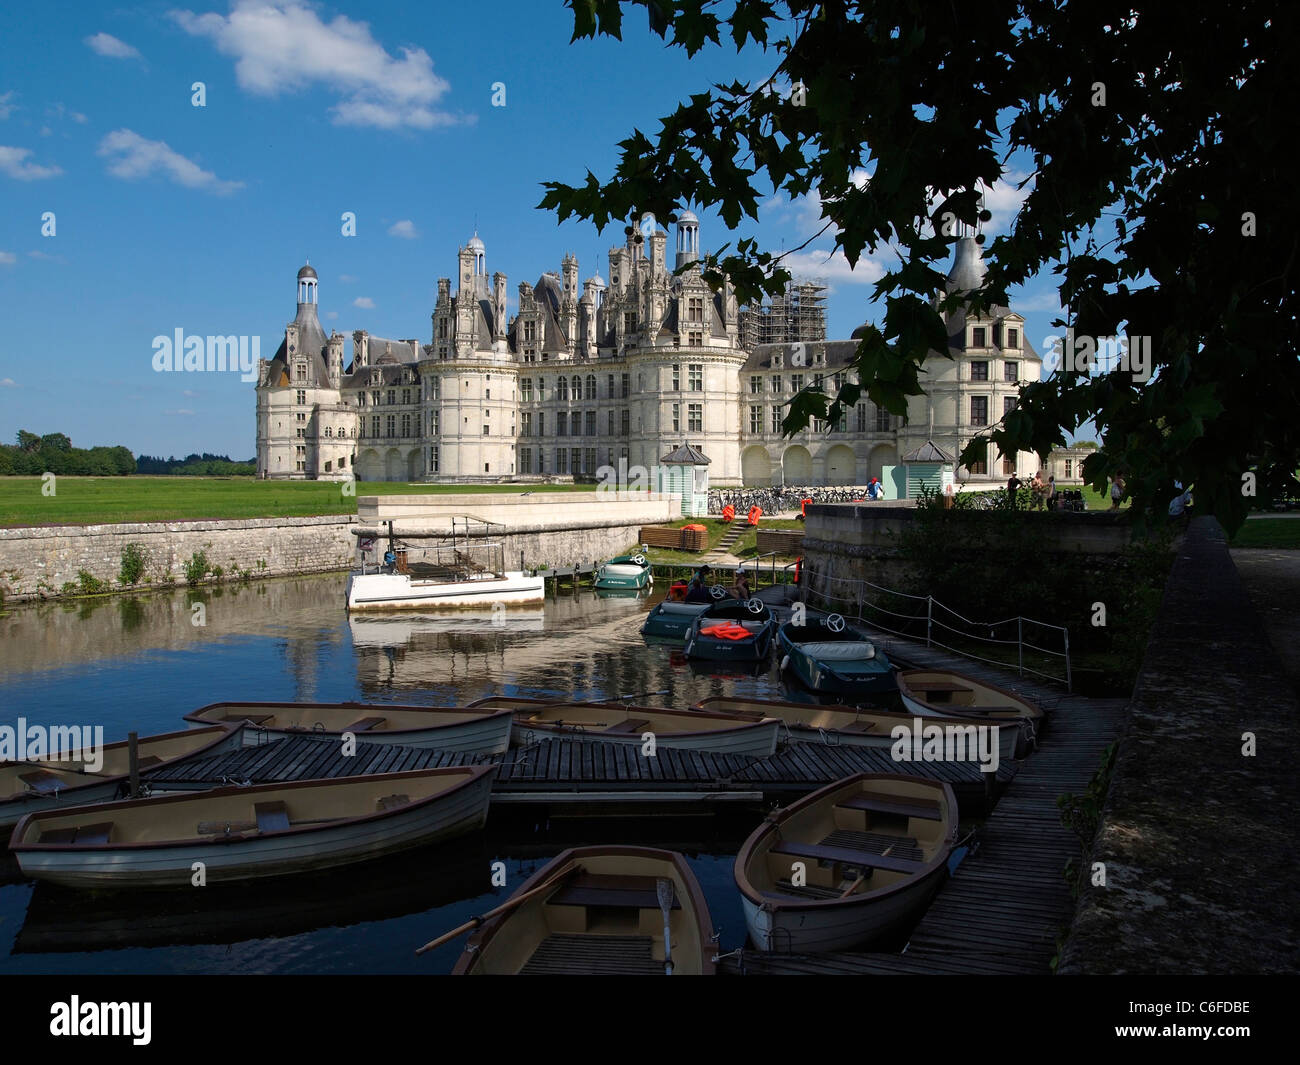 Tourist rental boats at the Chateau Royal de Chambord castle, Loire valley, France Stock Photo